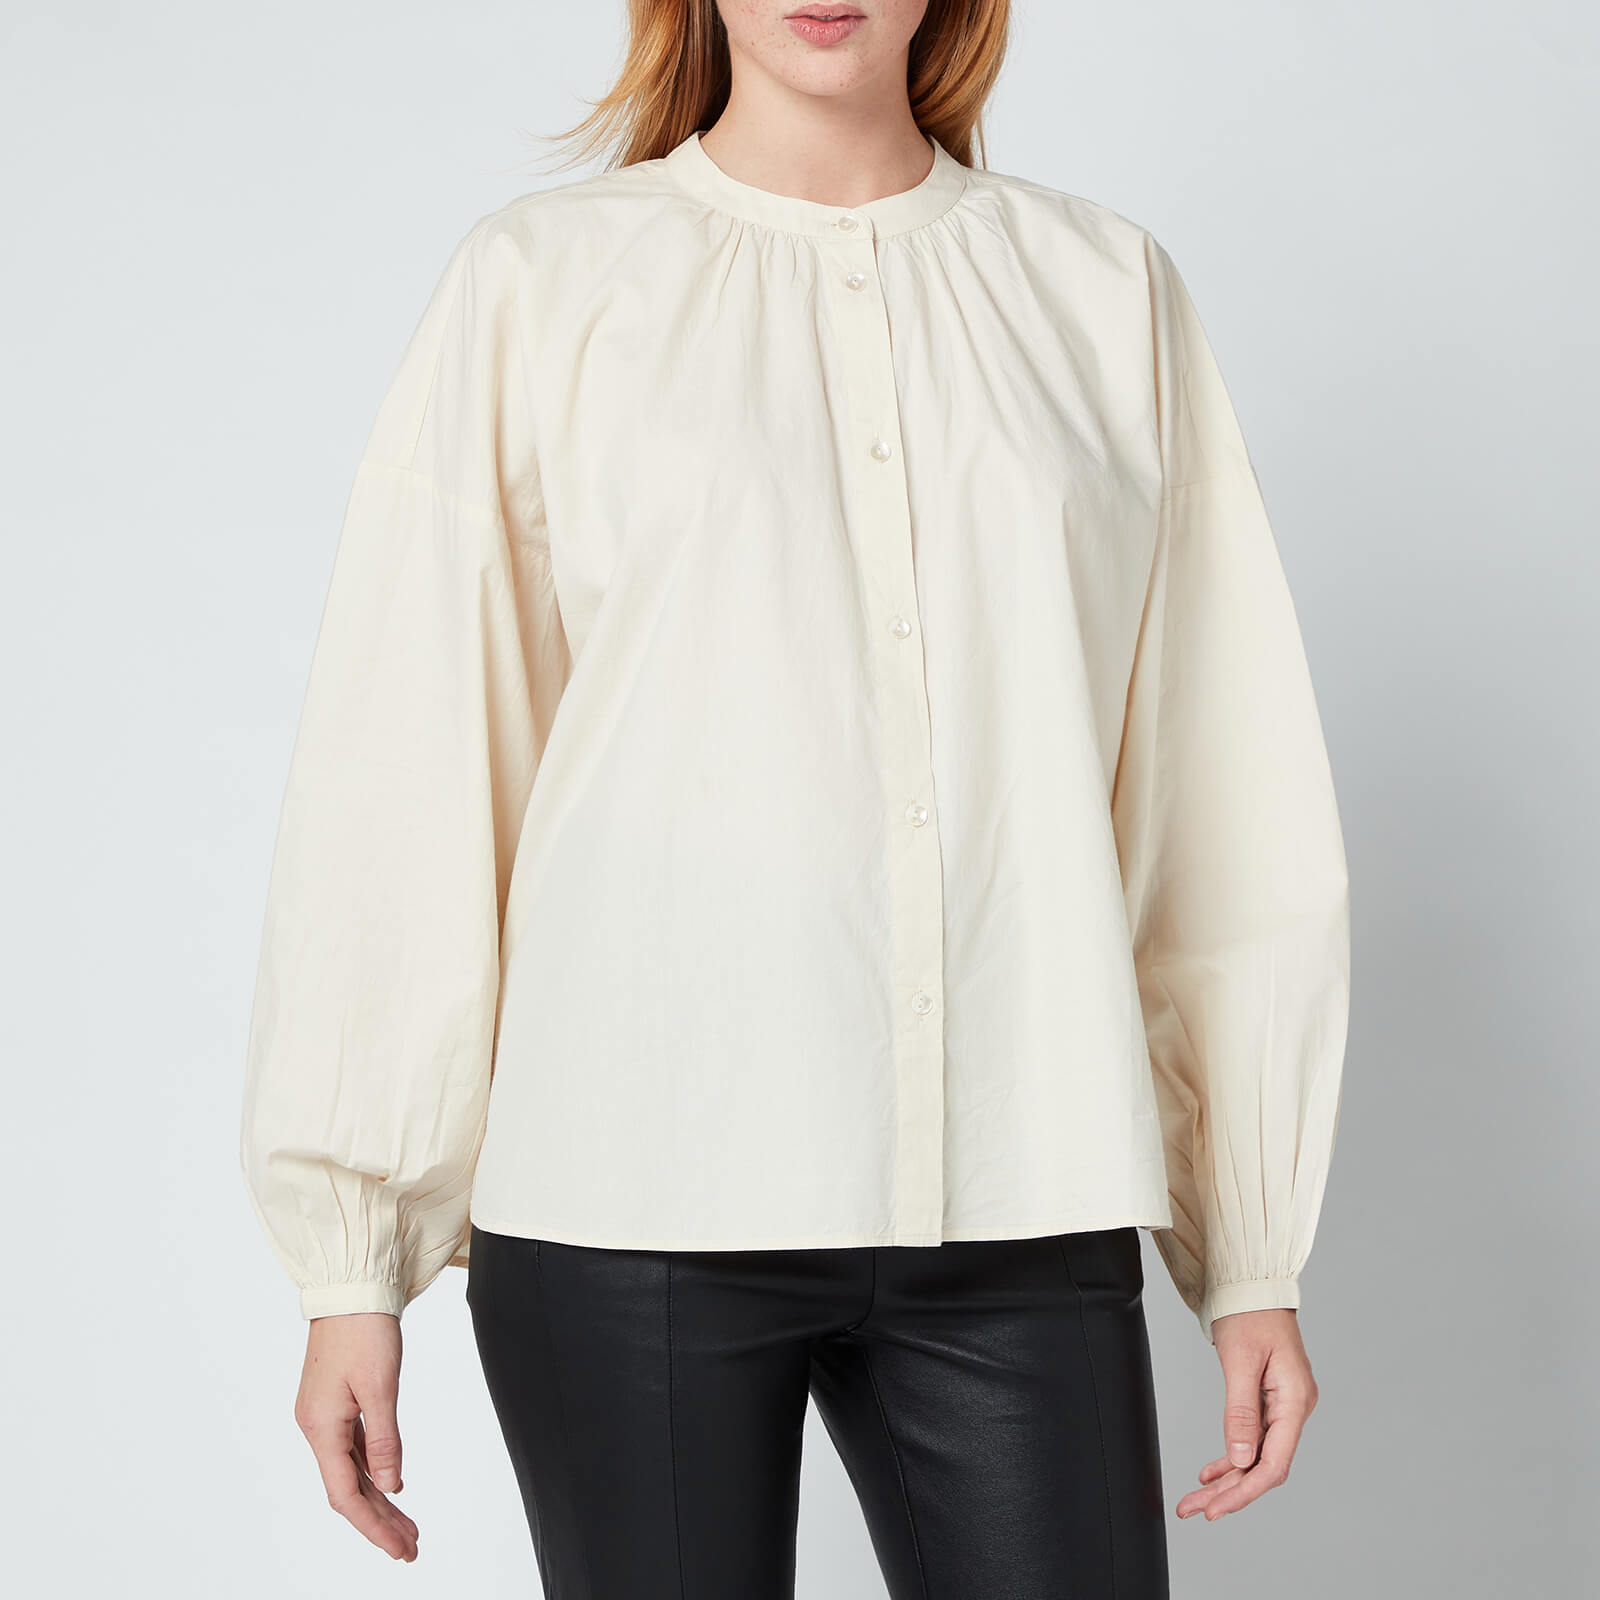 skall studio women's cilla shirt - cream - eu 36/uk 8